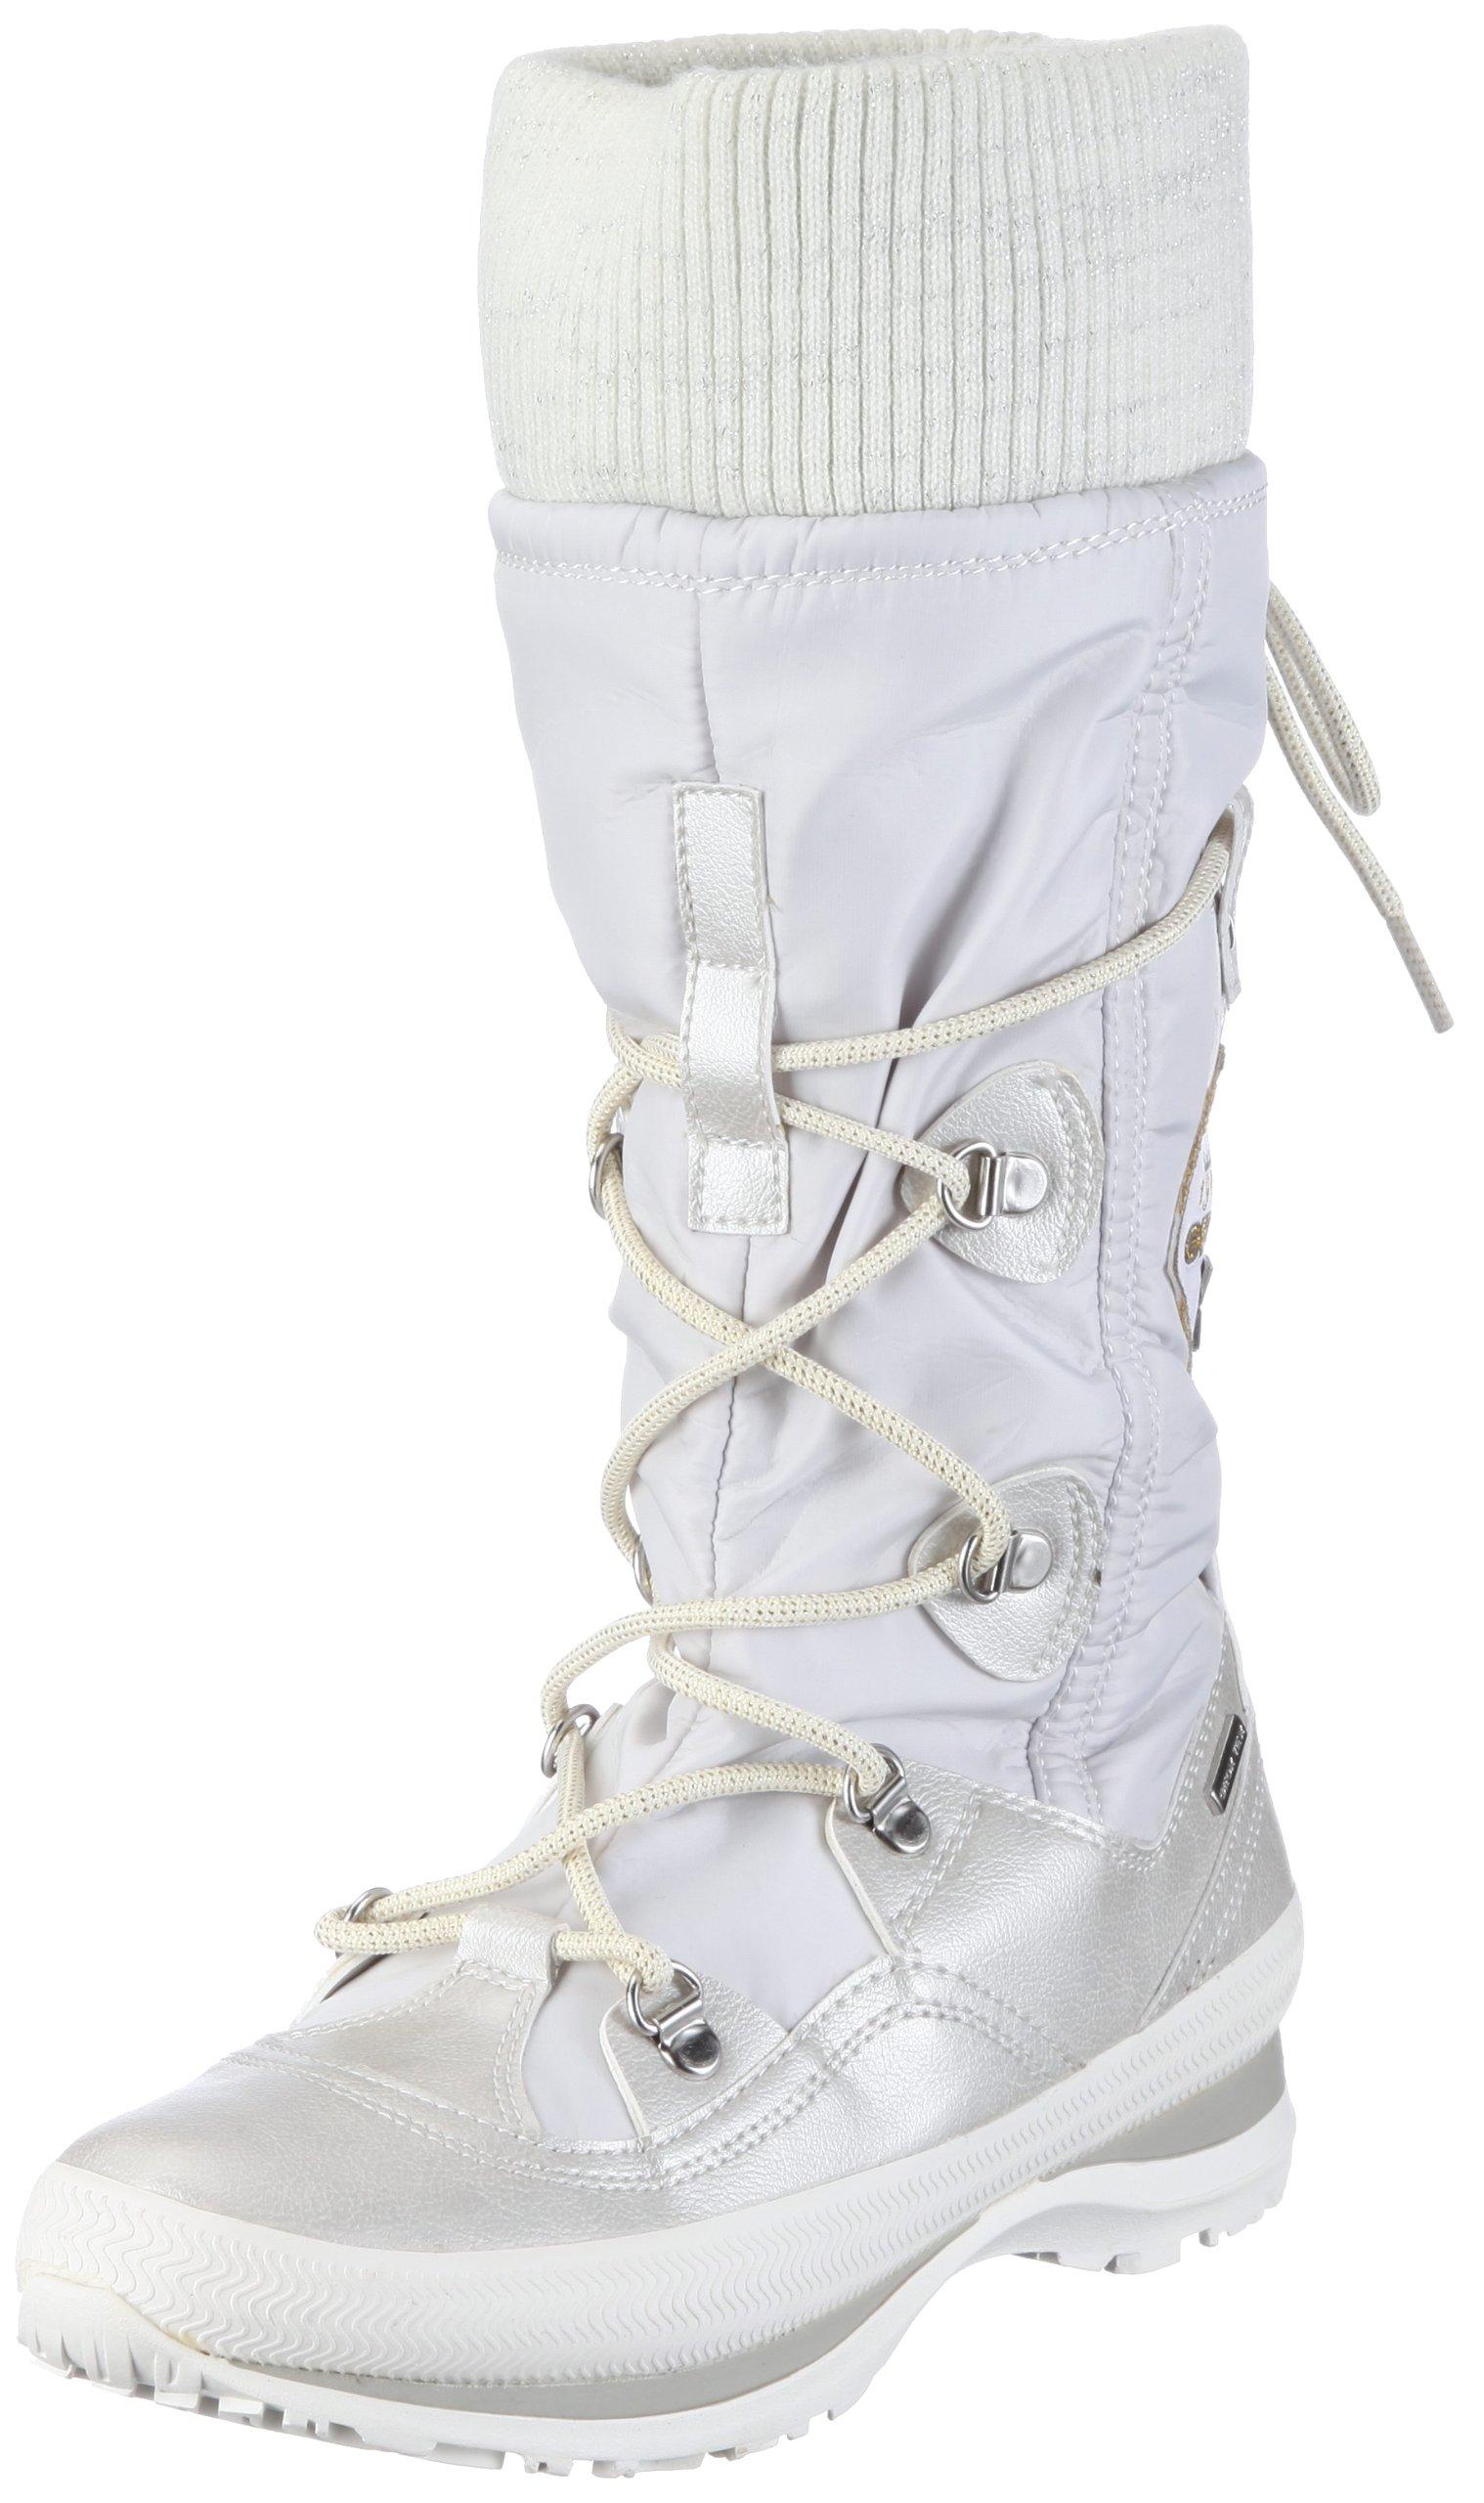 Geox Donna Wintry Stiv Wp C Flat Boot,white,41 Eu/10.5 M Us | Lyst